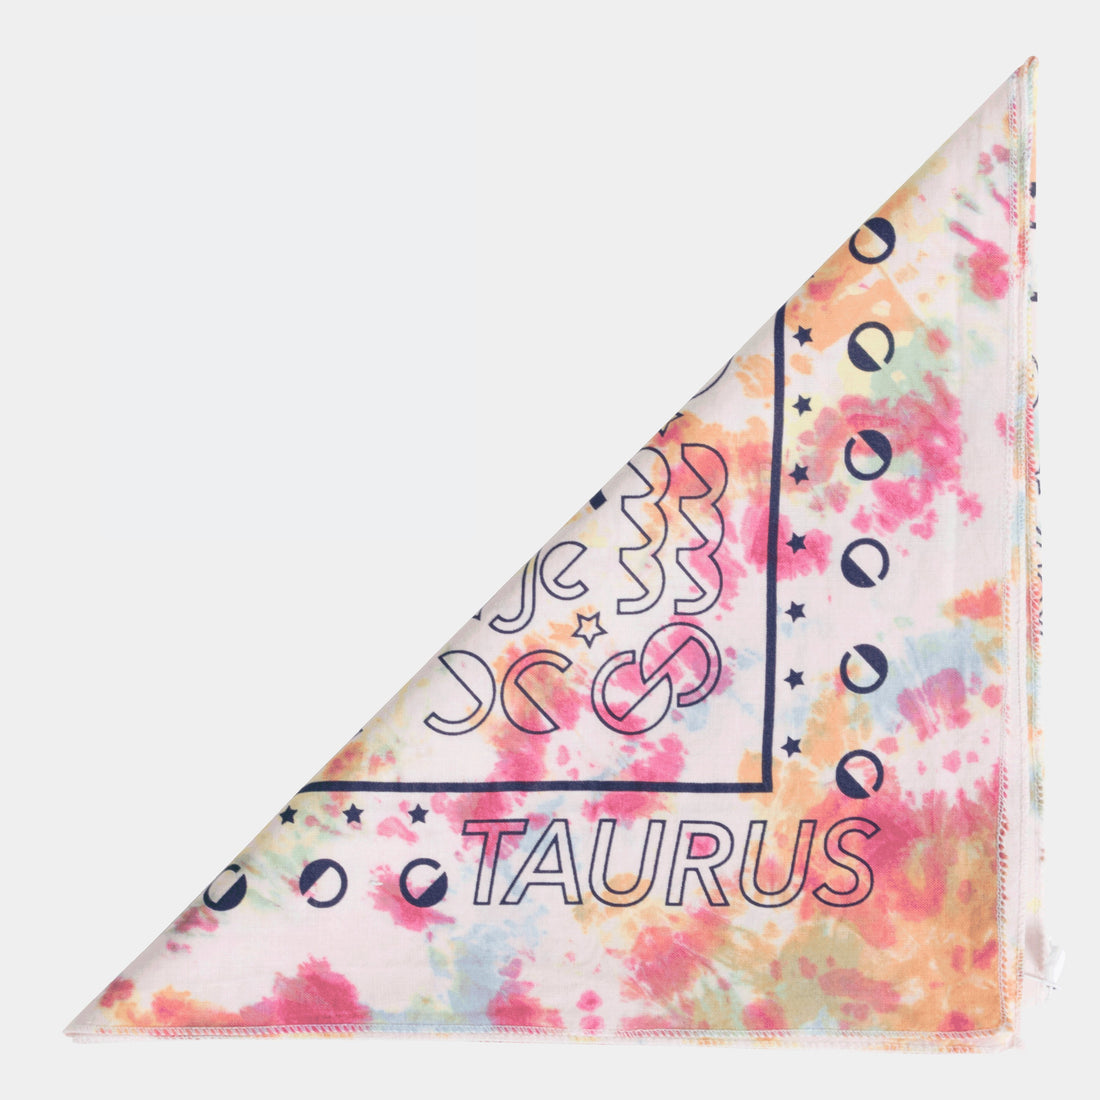 Dooz Taurus screen printed cotton bandana in rainbow tie dye folded